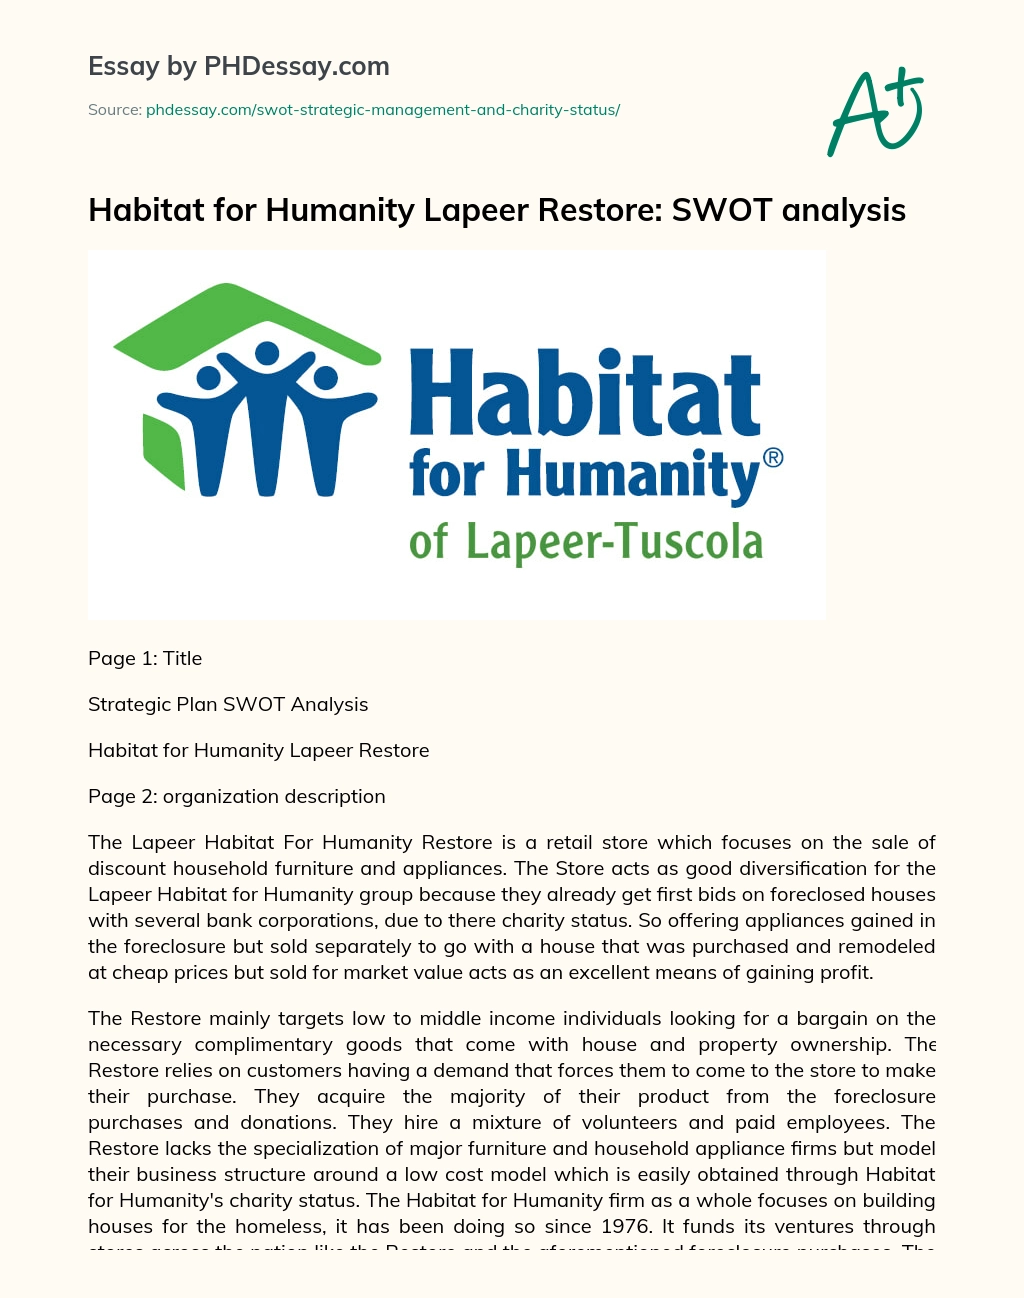 Habitat for Humanity Lapeer Restore: SWOT Analysis essay